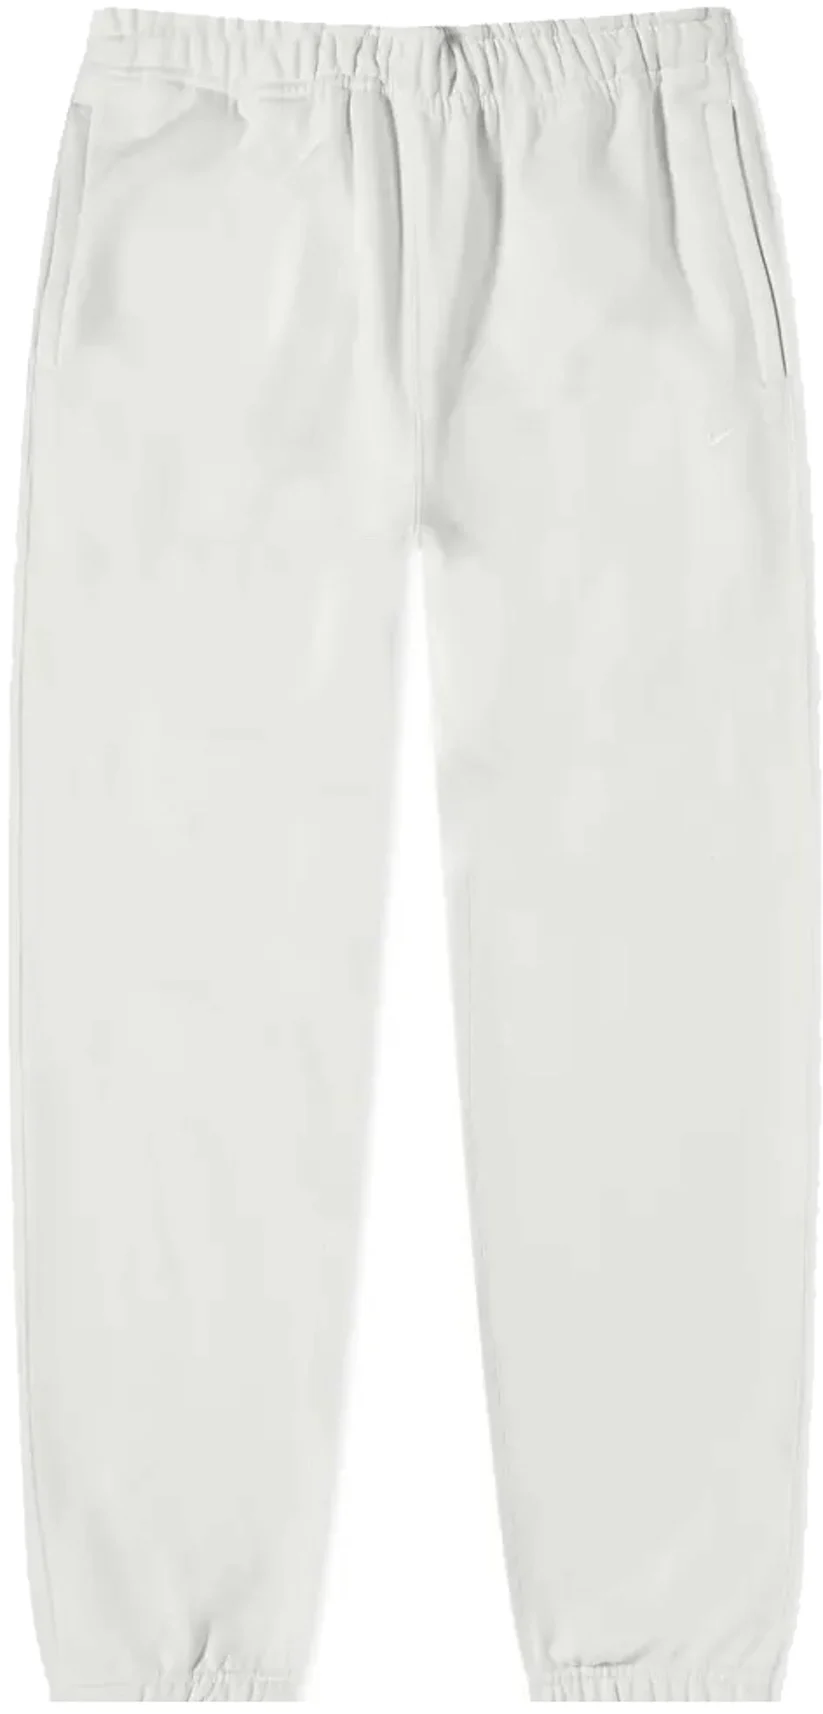  Nike Solo Swoosh Men's Fleece Pants, Canyon Rust/White